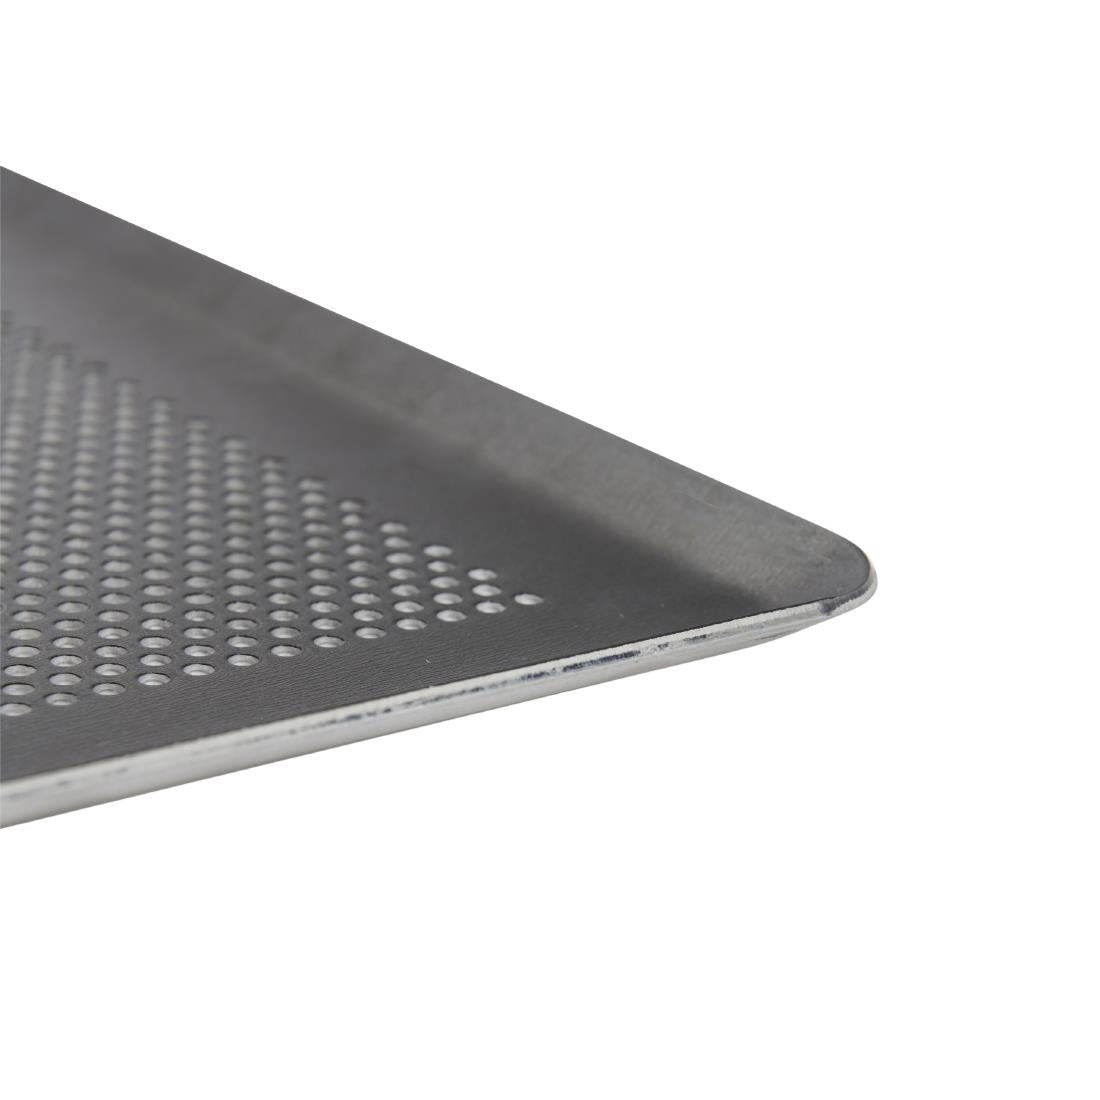 DZ707 De Buyer Perforated Non-stick Aluminium Baking Tray 400x300mm